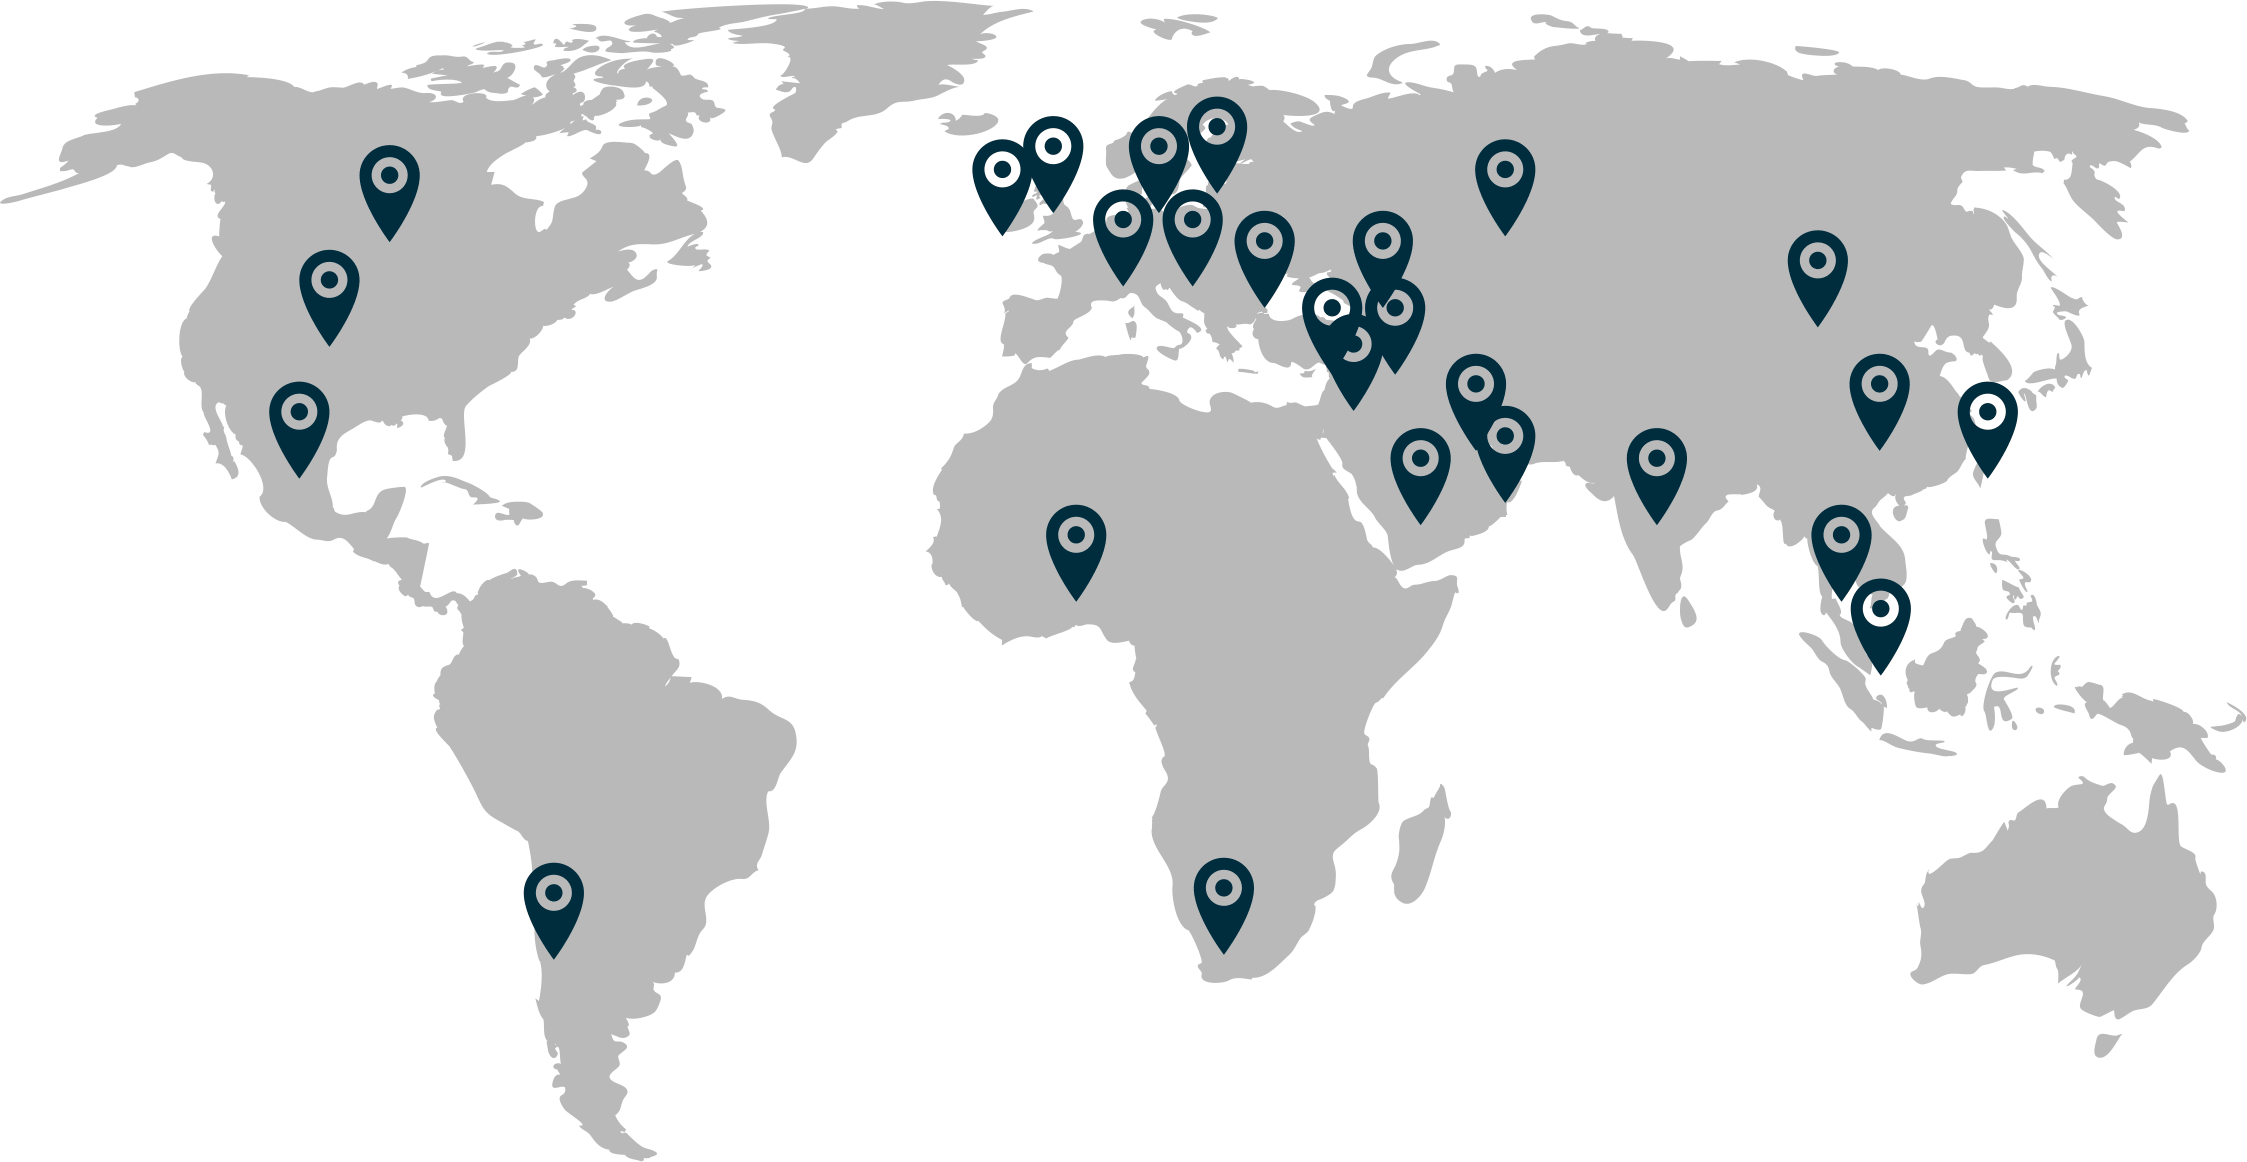 Global Growth Hub across the globe